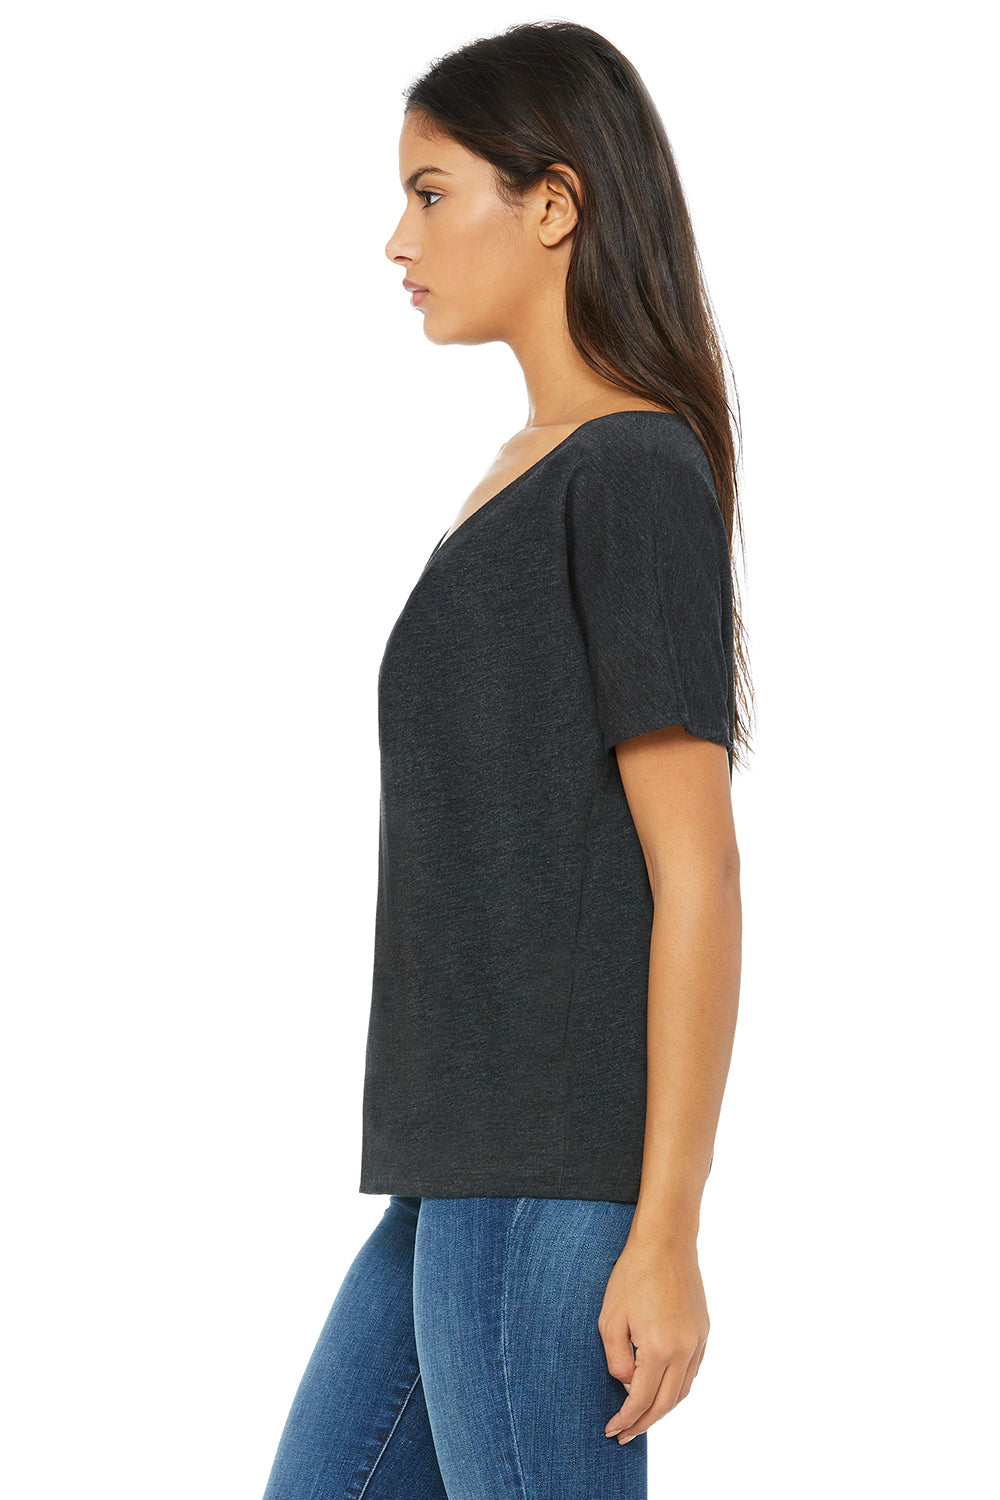 Bella + Canvas 8815 Womens Slouchy Short Sleeve V-Neck T-Shirt Charcoal Black Triblend Side